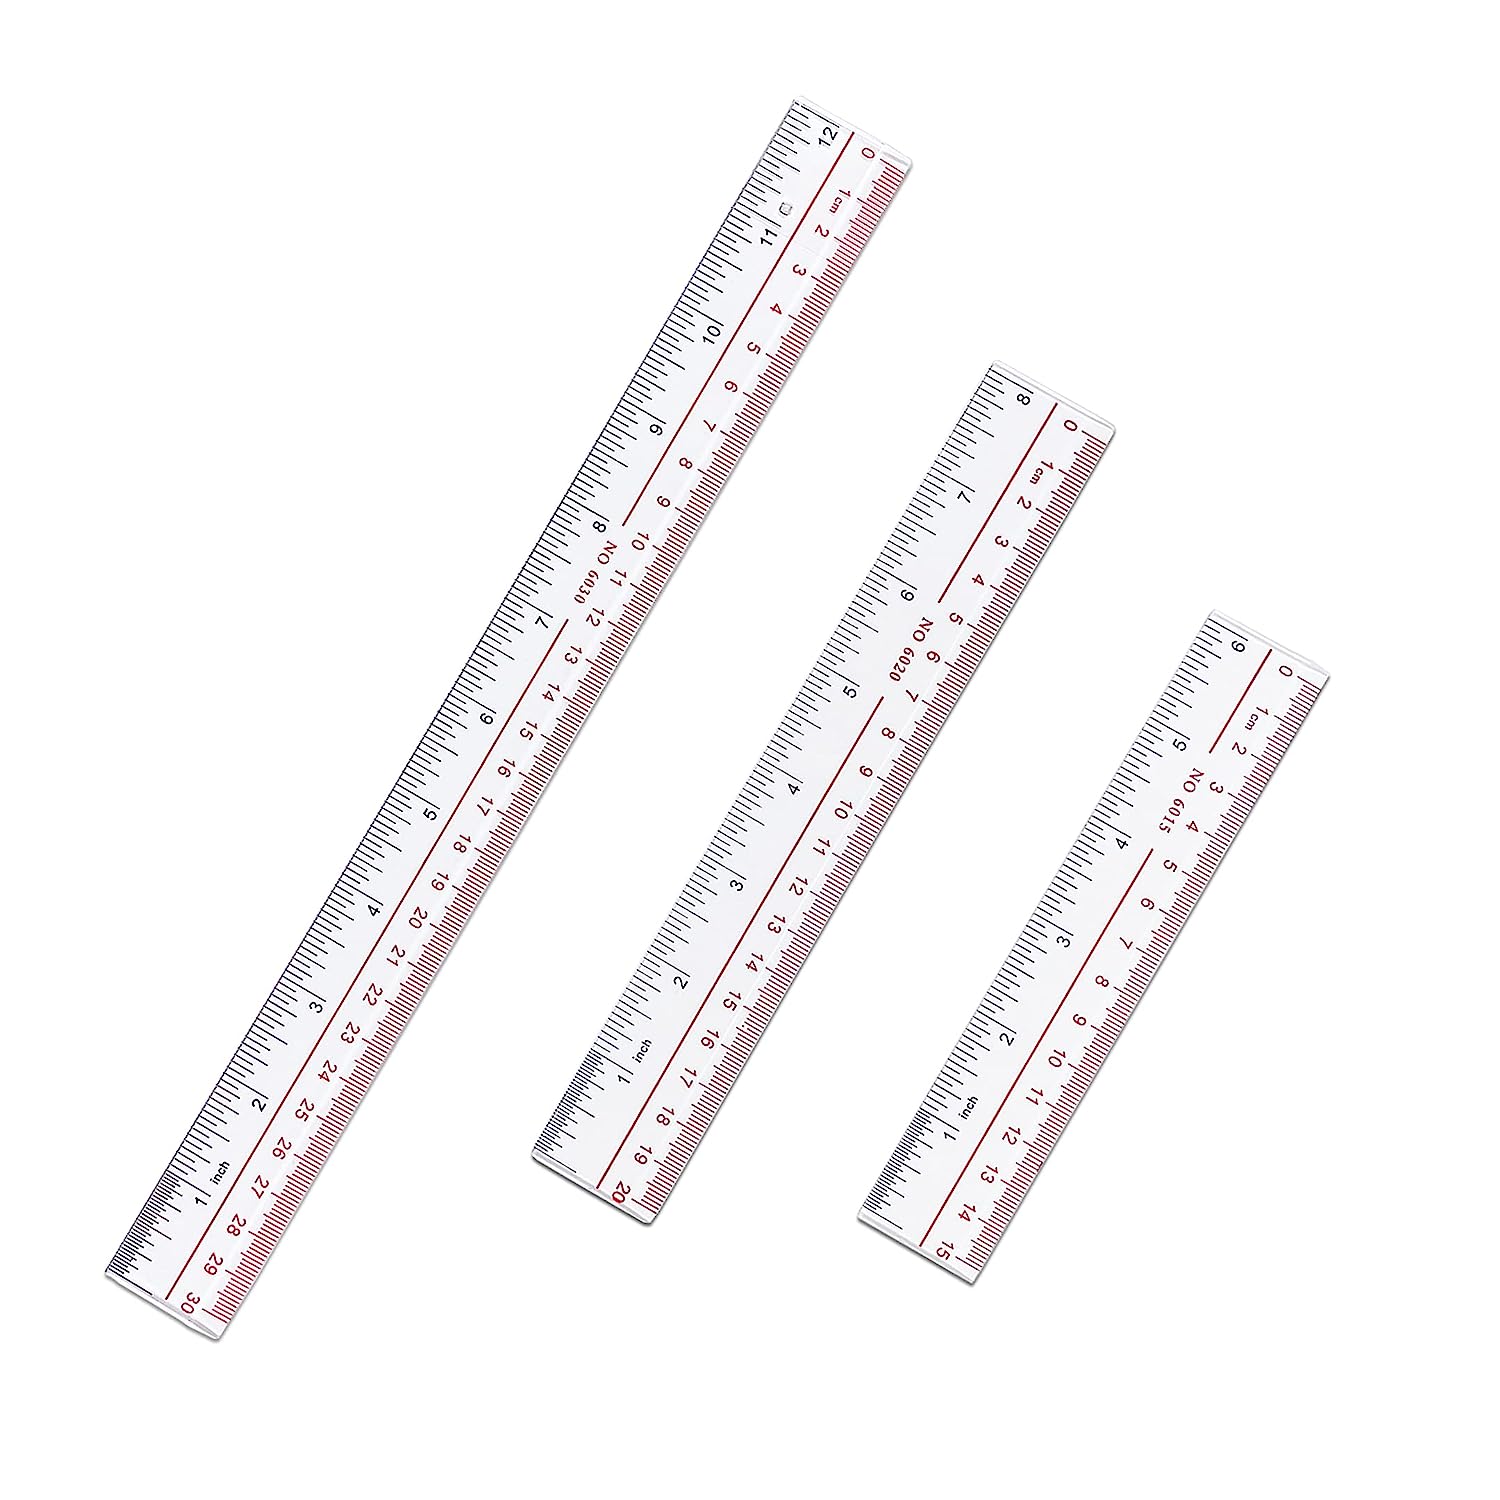 1pc 30cm clear Flexible Ruler Transparent Ruler